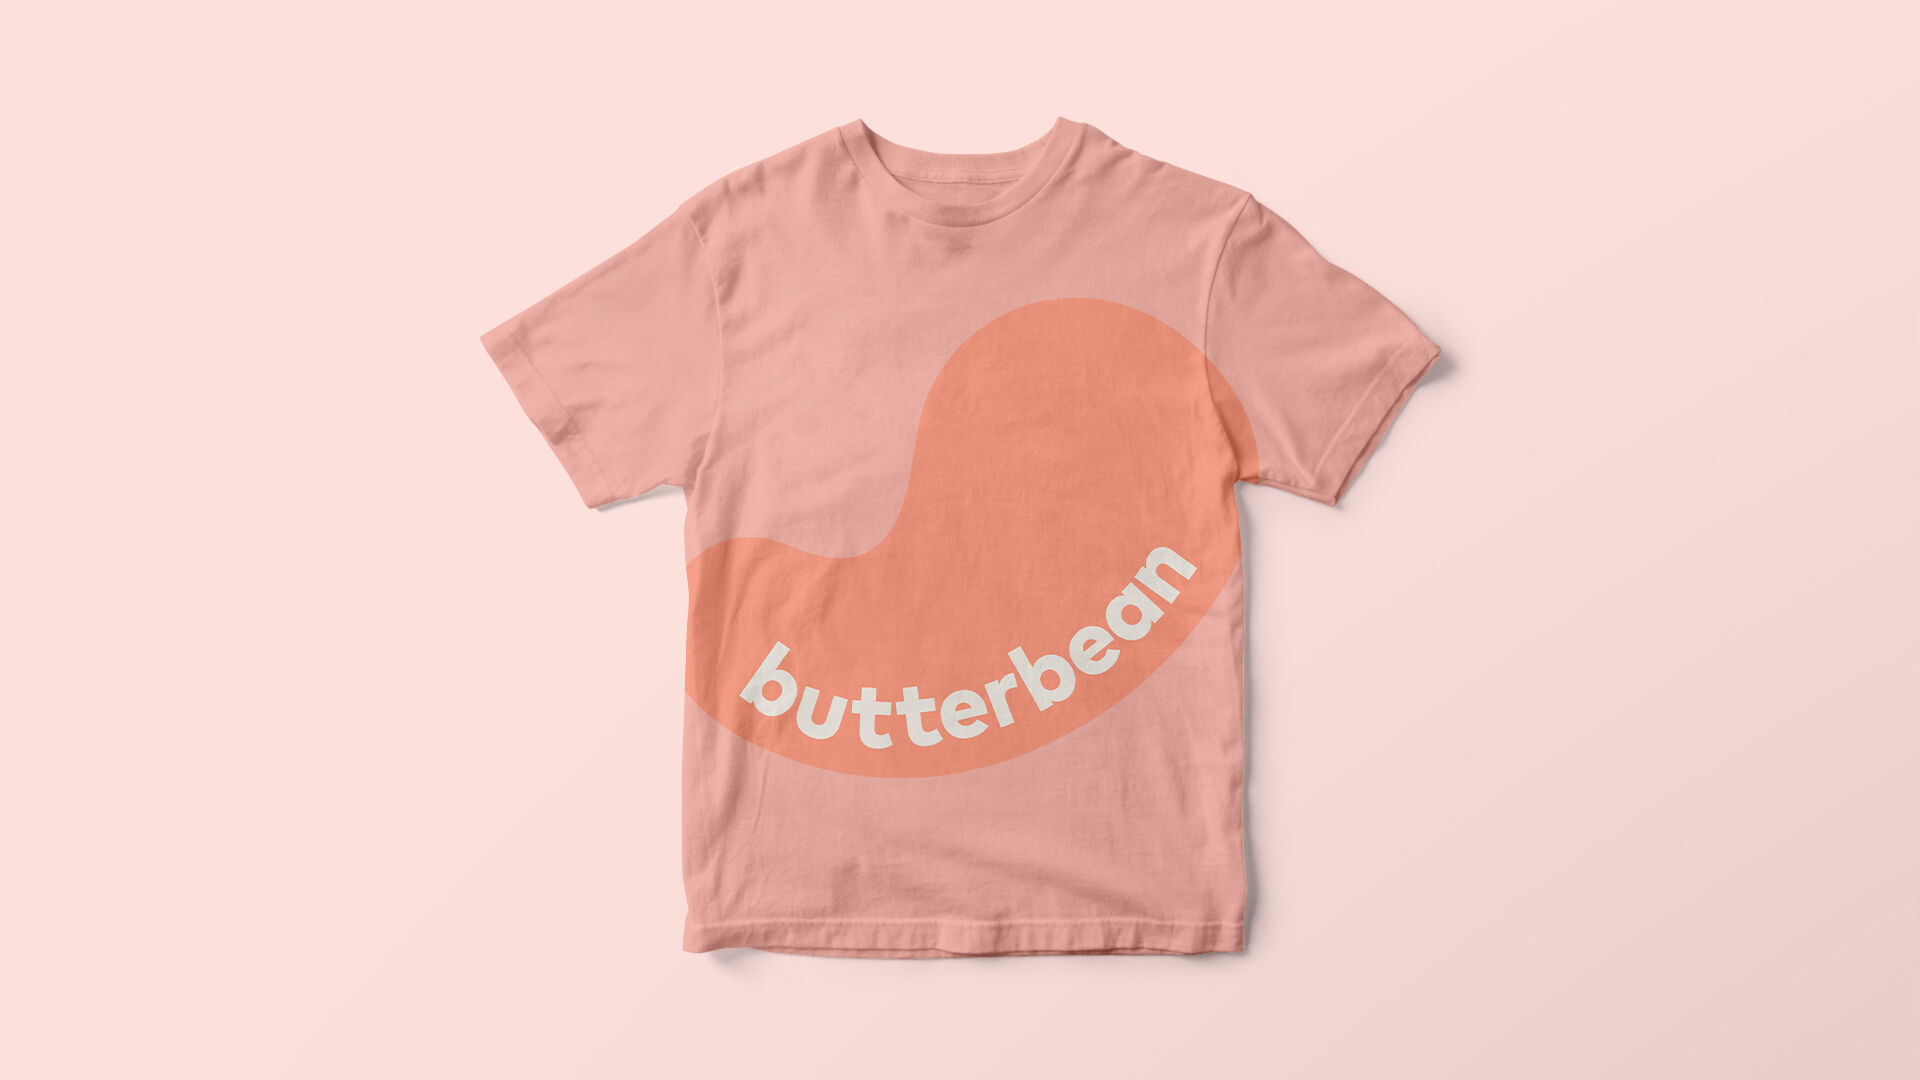 Butterbean Tshirt Mockup